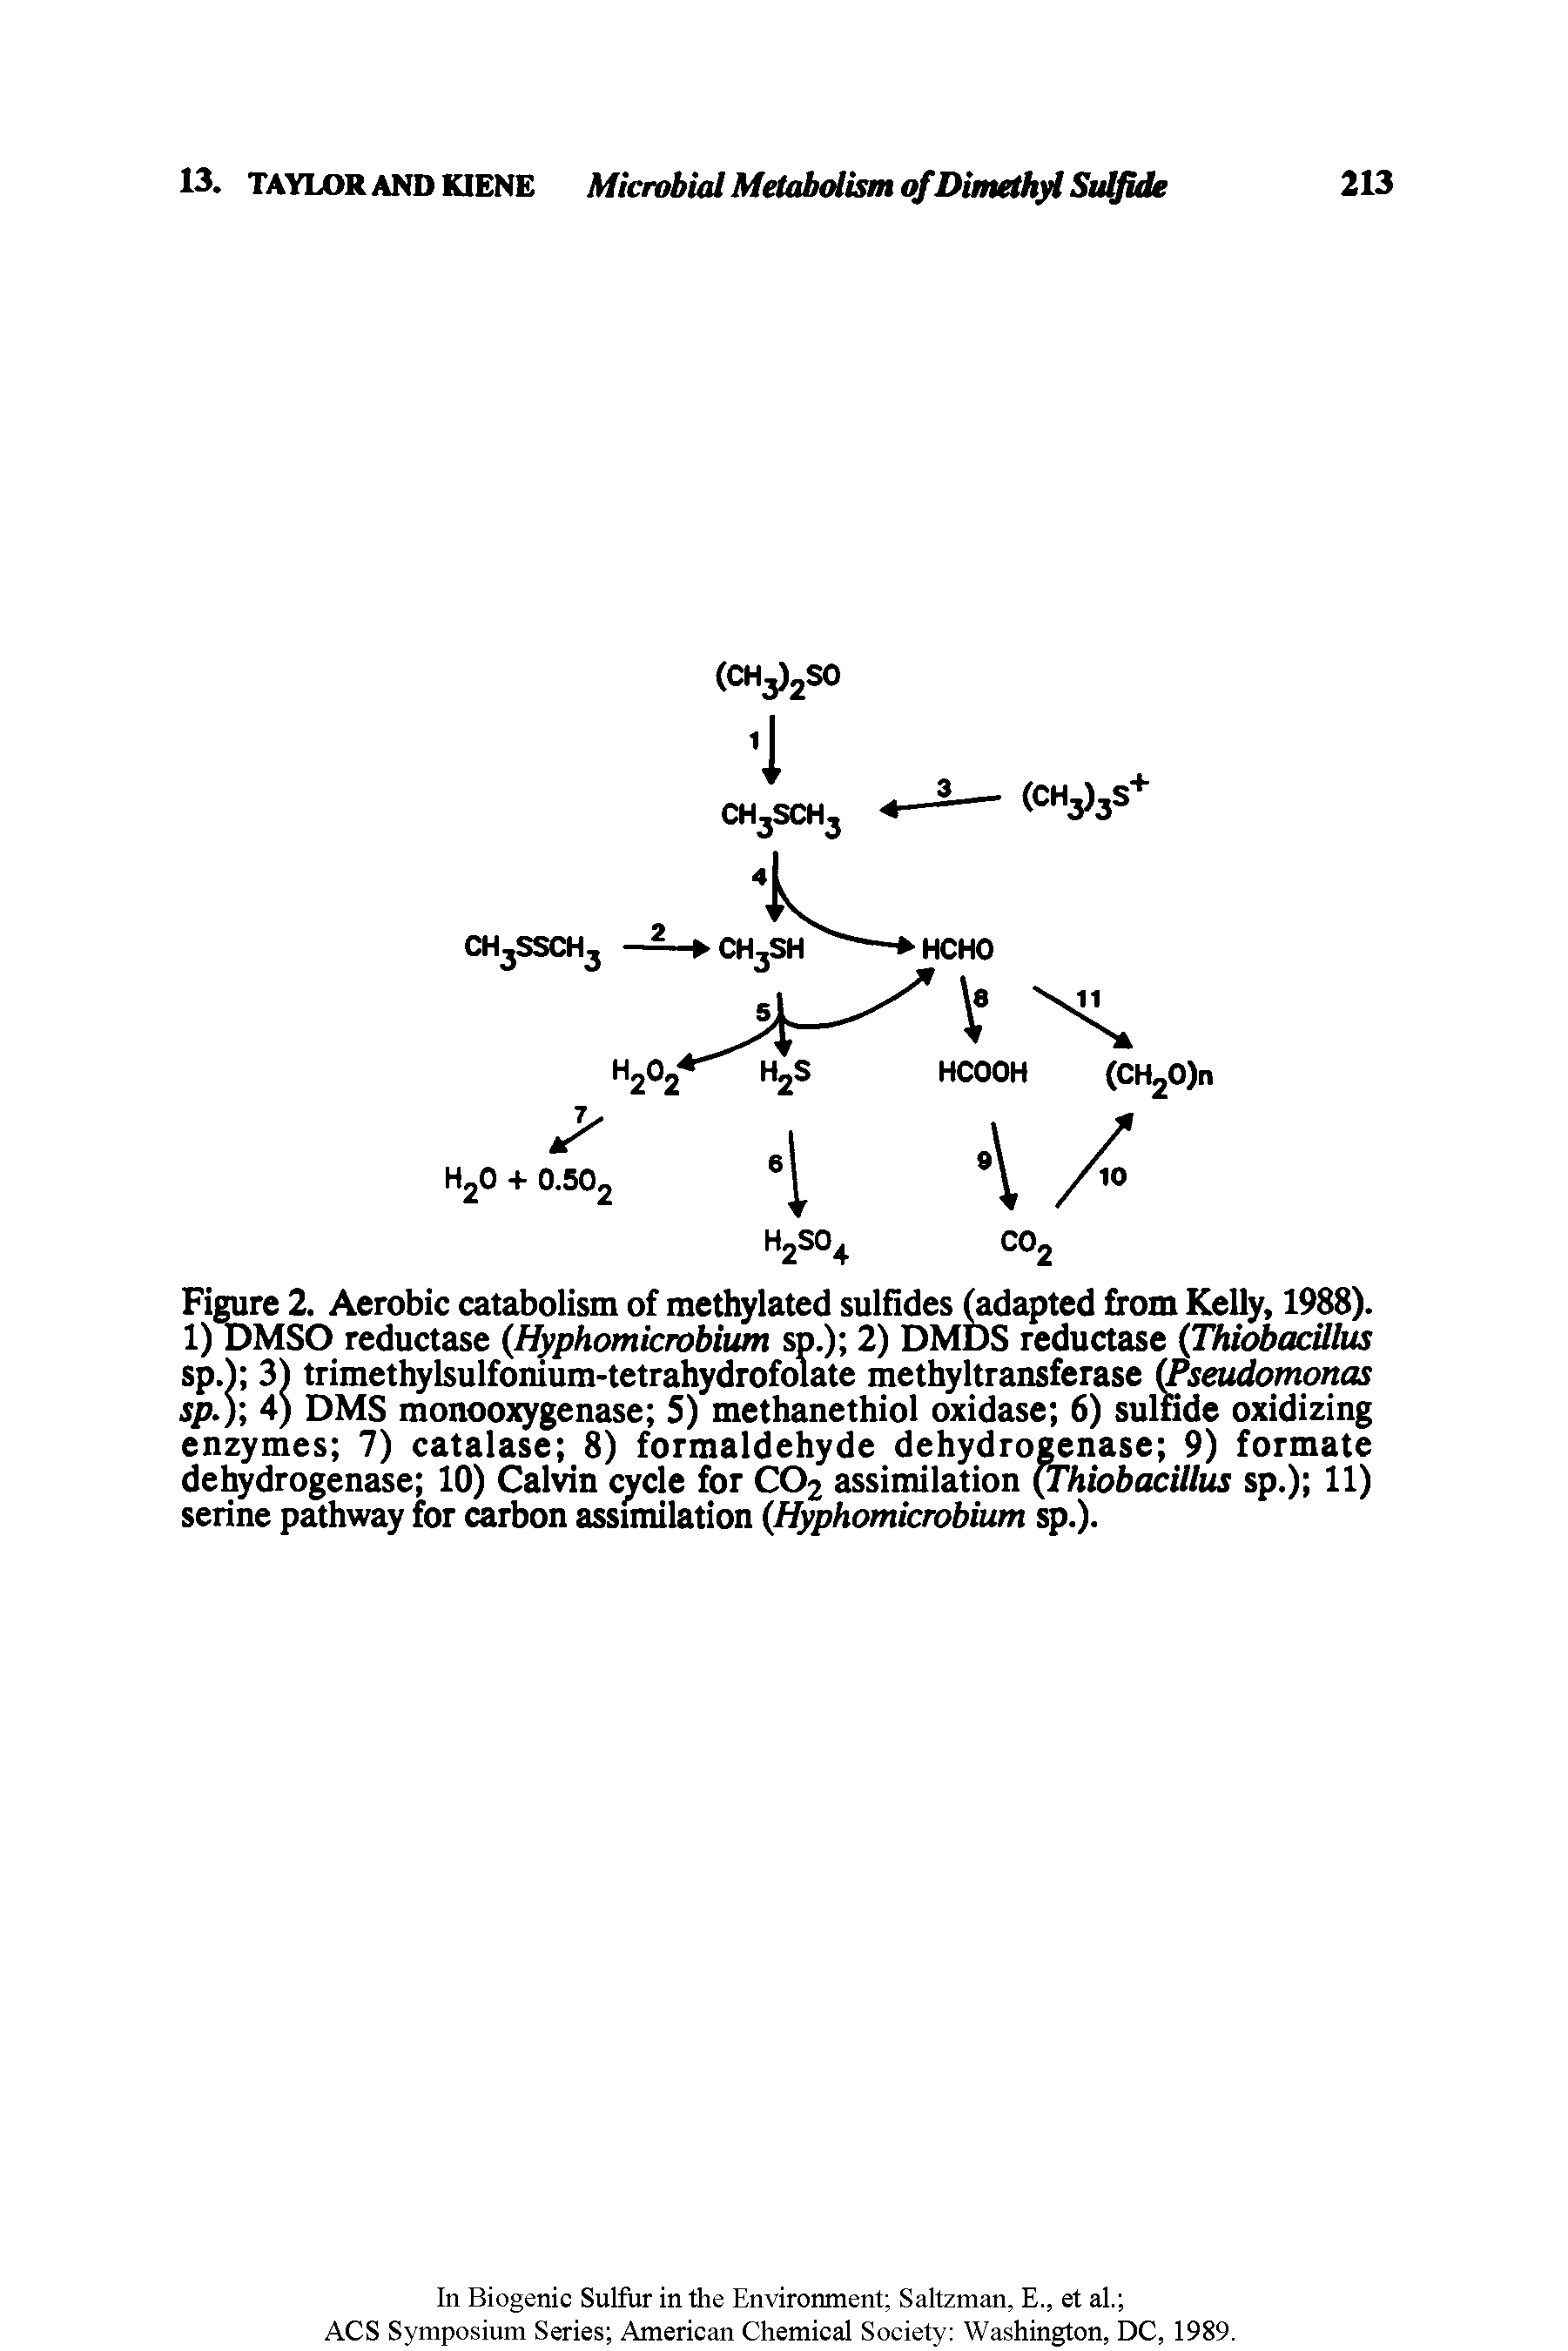 Figure 2. Aerobic catabolism of methylated sulfides (adapted from Kelly, 1988). 1) DMSO reductase (Hyphomicrobium sp.) 2) DMDS reductase (Thiobacillus sp. 3) trimethylsulfonium-tetrahydrofolate methyltransferase (Pseudomonas sp.) 4) DMS monooxygenase 5) methanethiol oxidase 6) sulfide oxidizing enzymes 7) catalase 8) formaldehyde dehydrogenase 9) formate dehydrogenase 10) Calvin cycle for CO2 assimilation (Thiobacillus sp.) 11) serine pathway for carbon assimilation (Hyphomicrobium sp.).